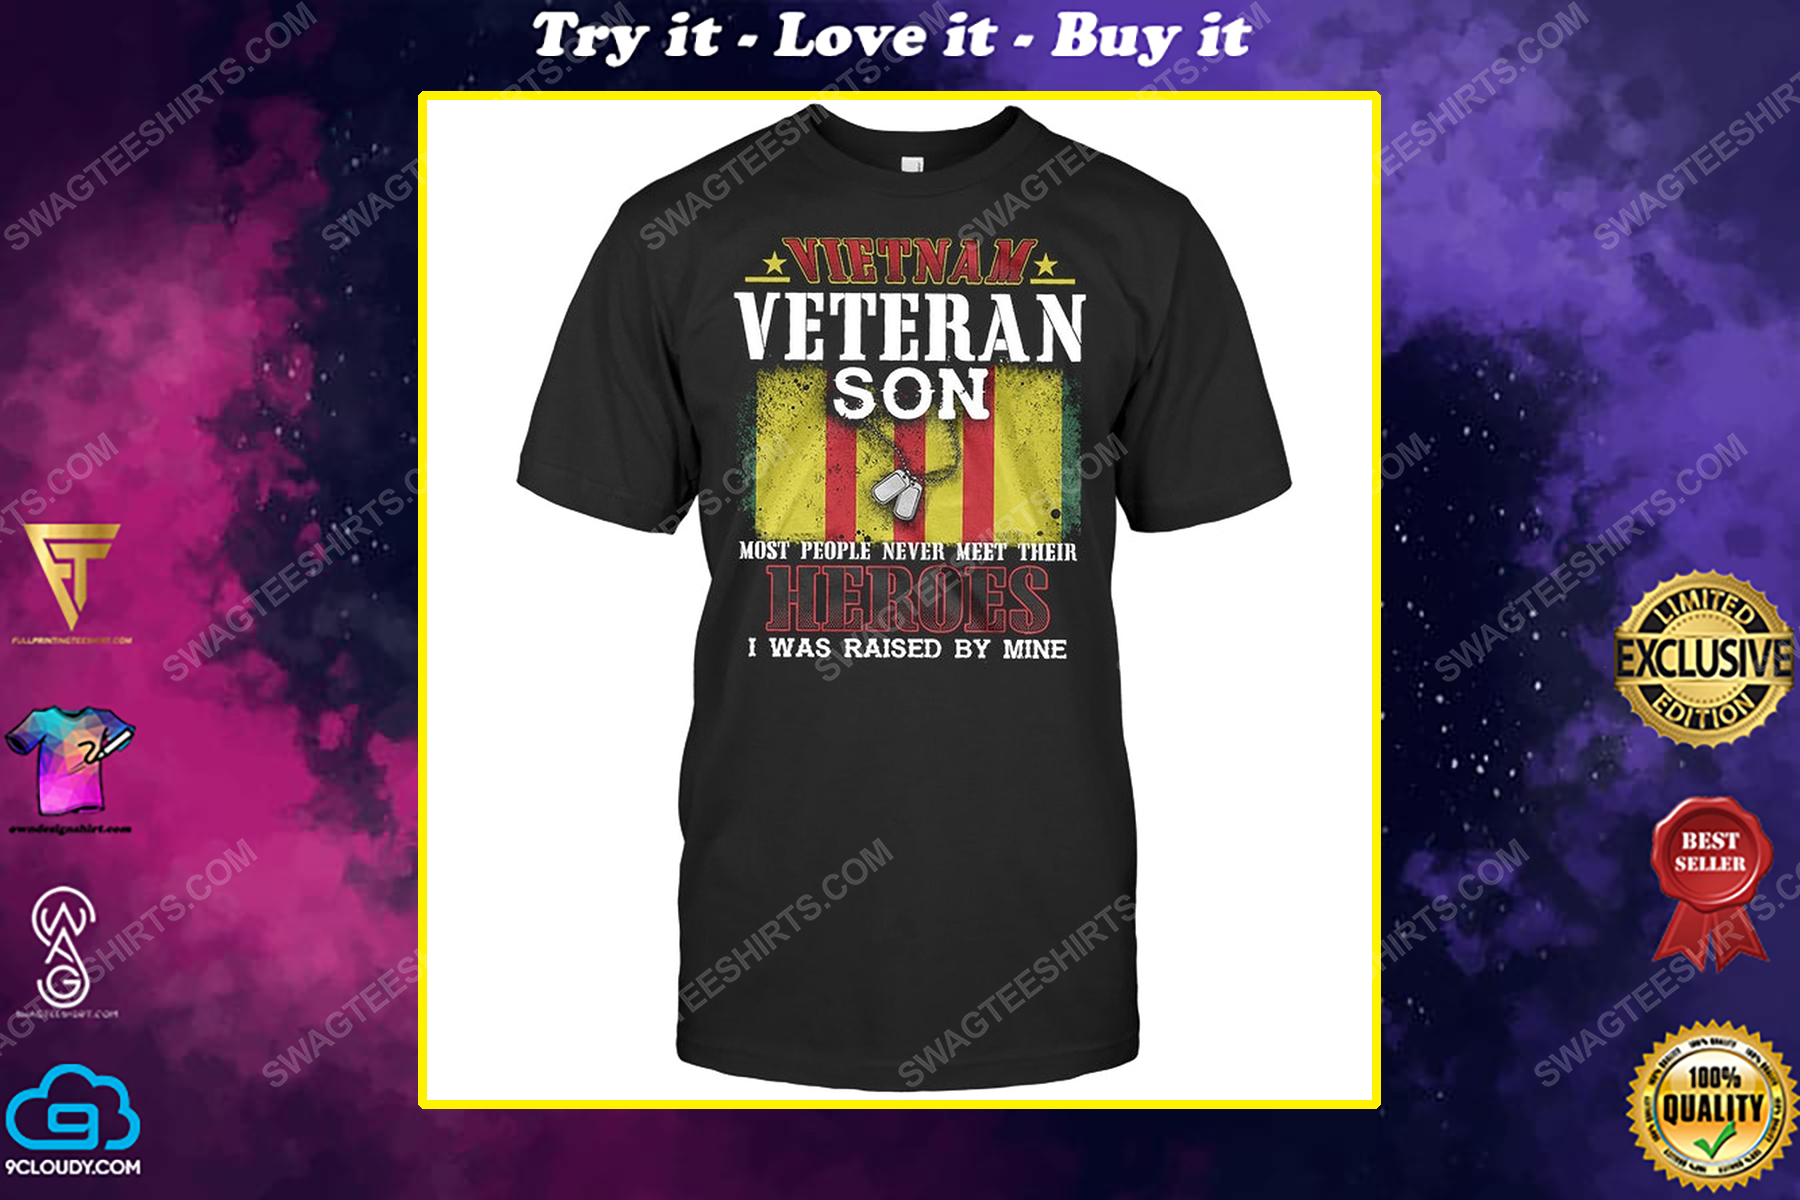 Vietnam veteran son most people never meet their heroes i was raised by mine shirt